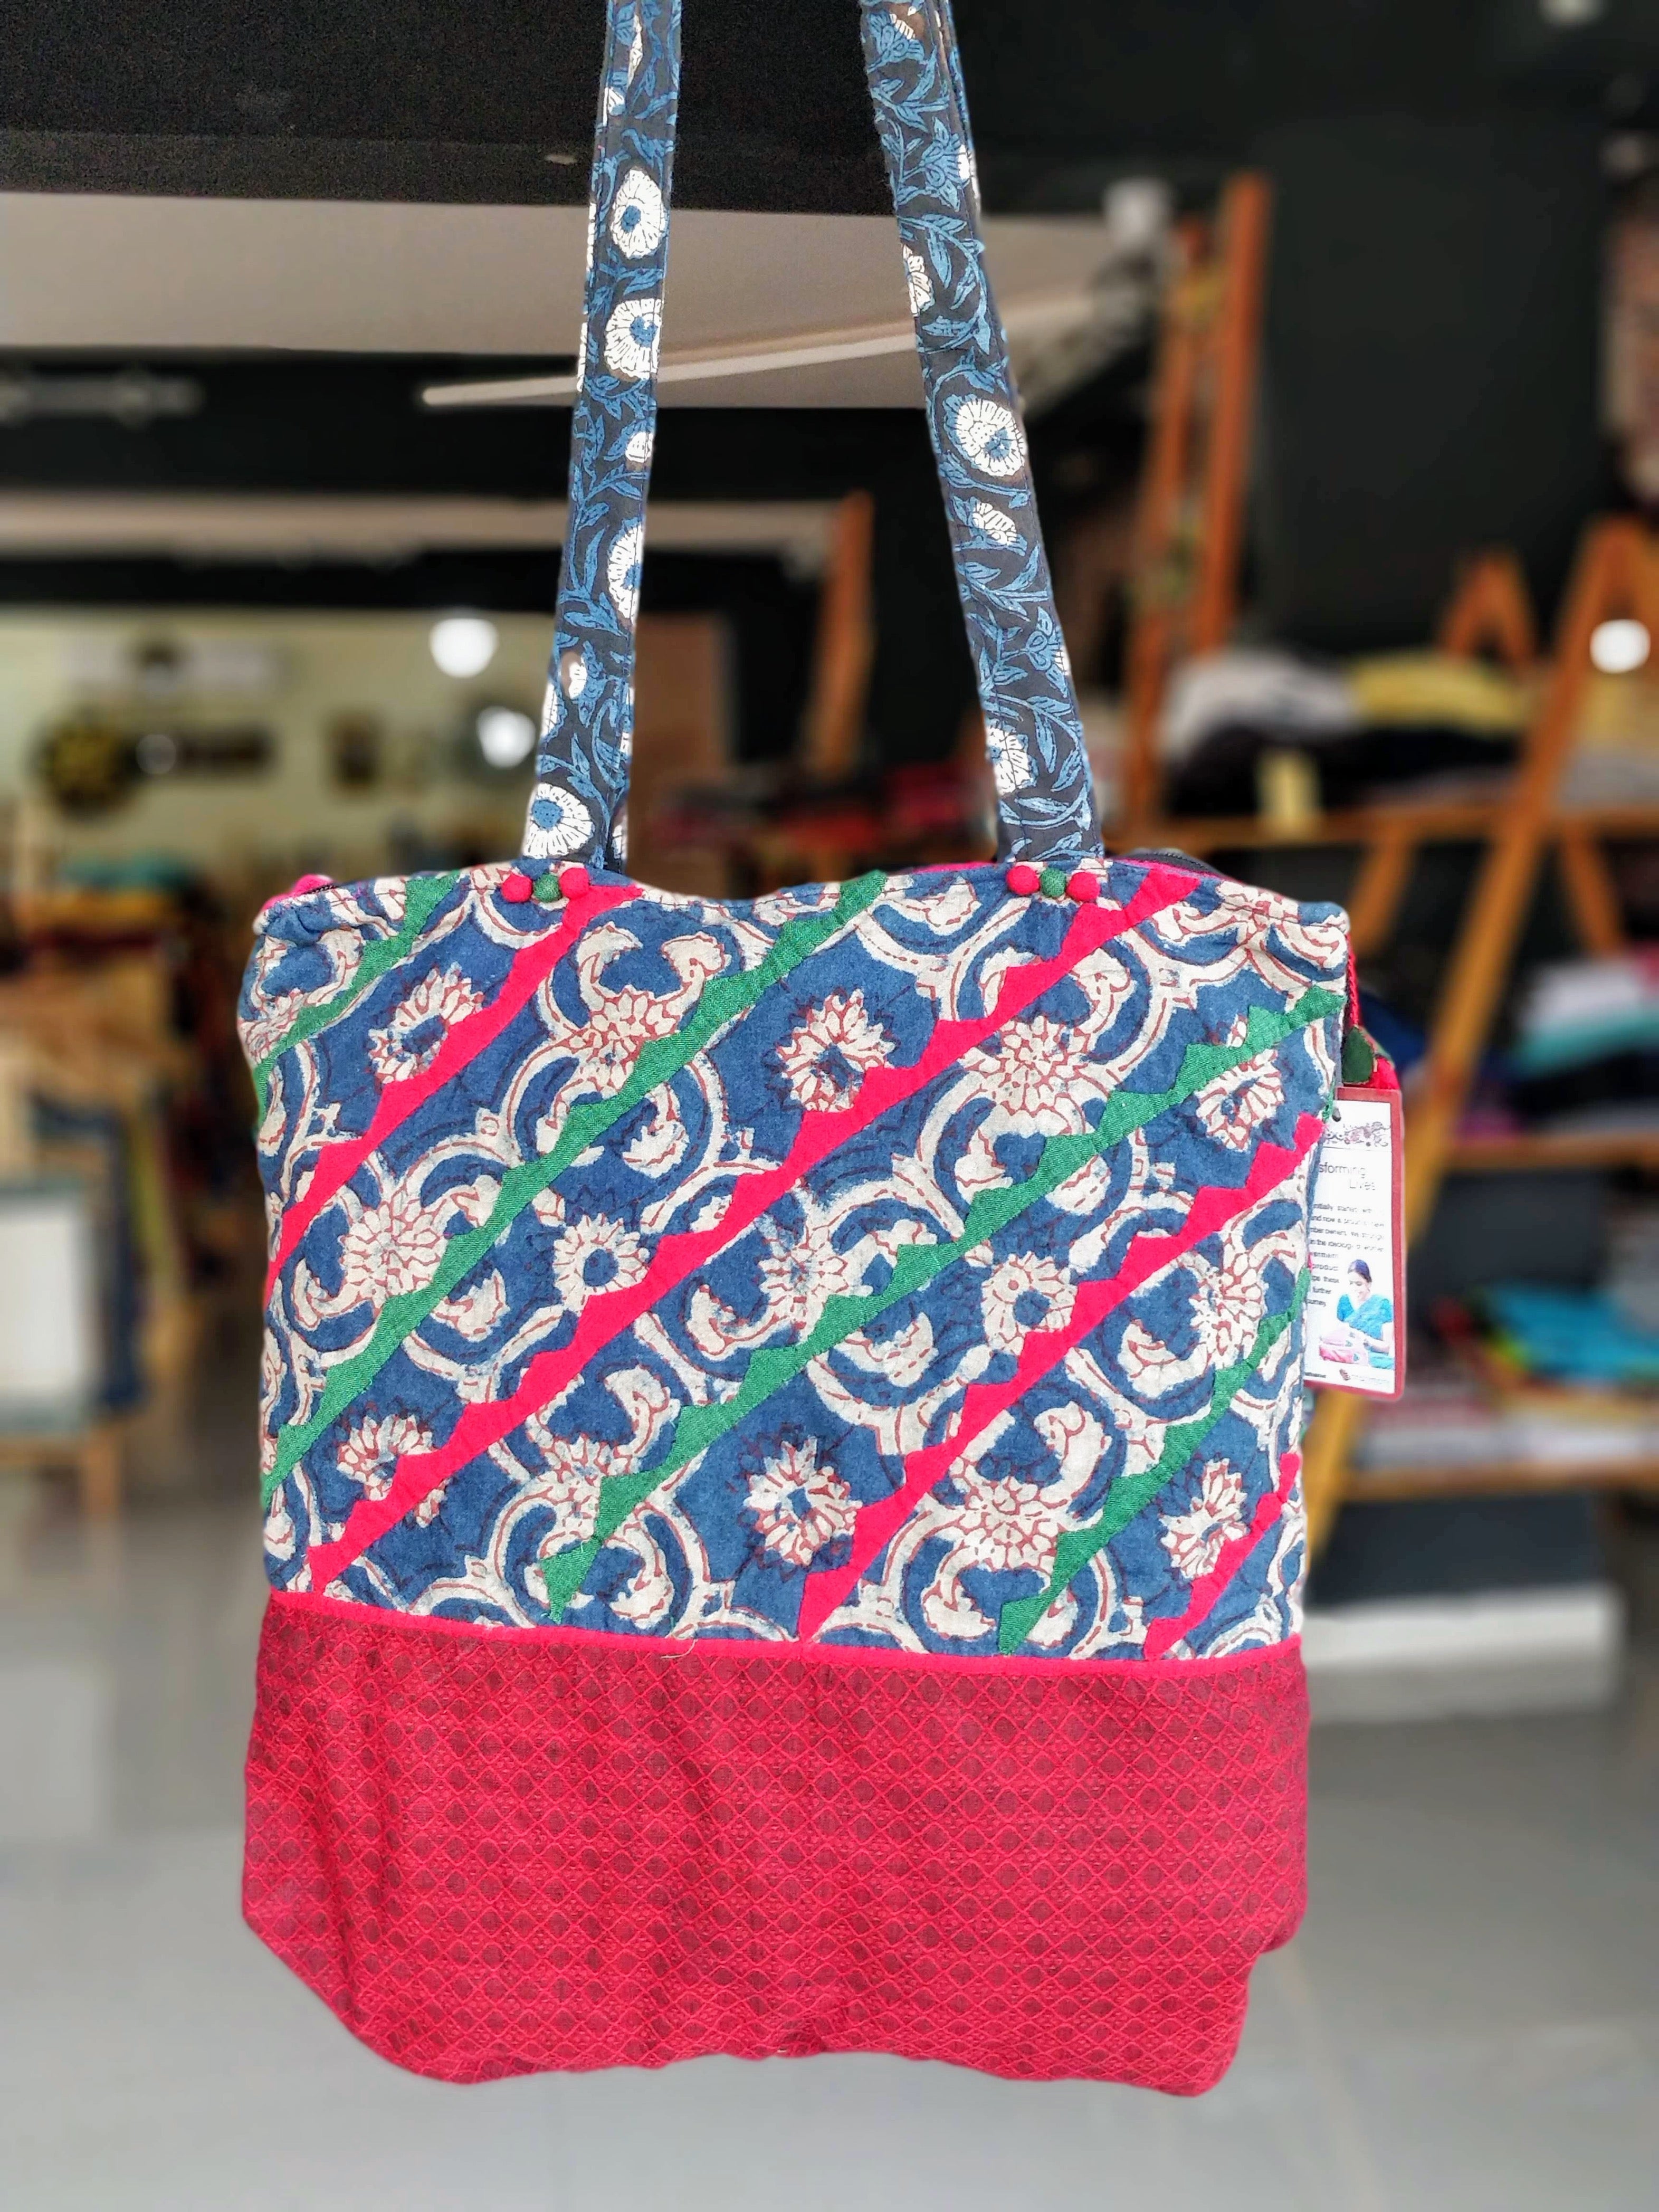 Decorating a handbag with tatted lace – Ranjana's Craft Blog